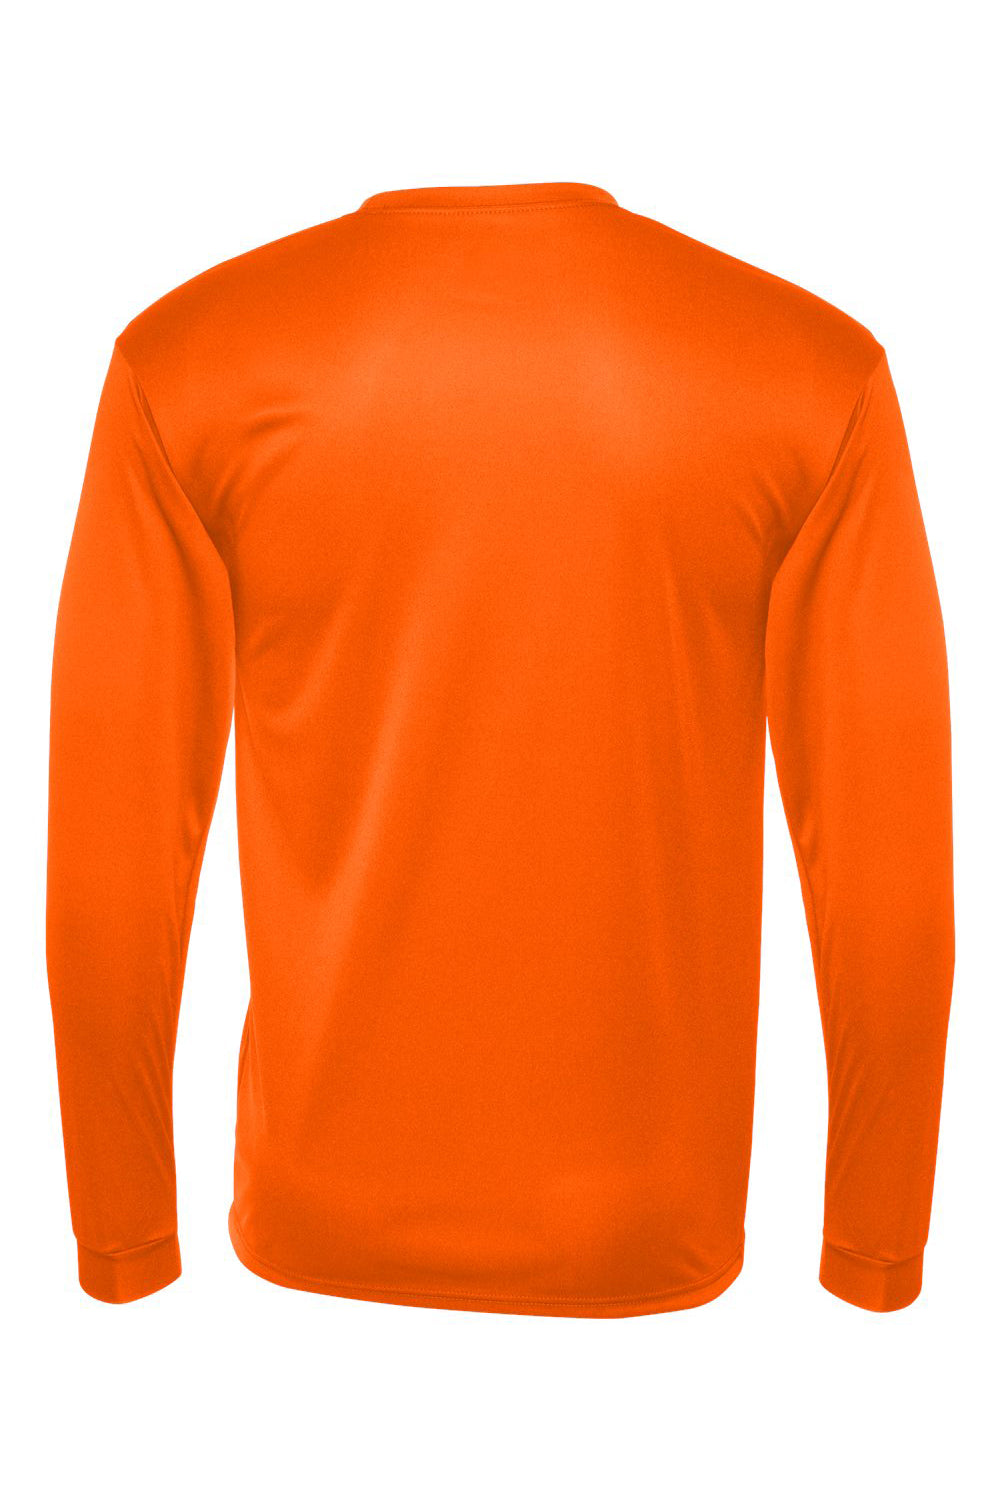 C2 Sport 5104 Mens Performance Moisture Wicking Long Sleeve Crewneck T-Shirt Safety Orange Flat Back